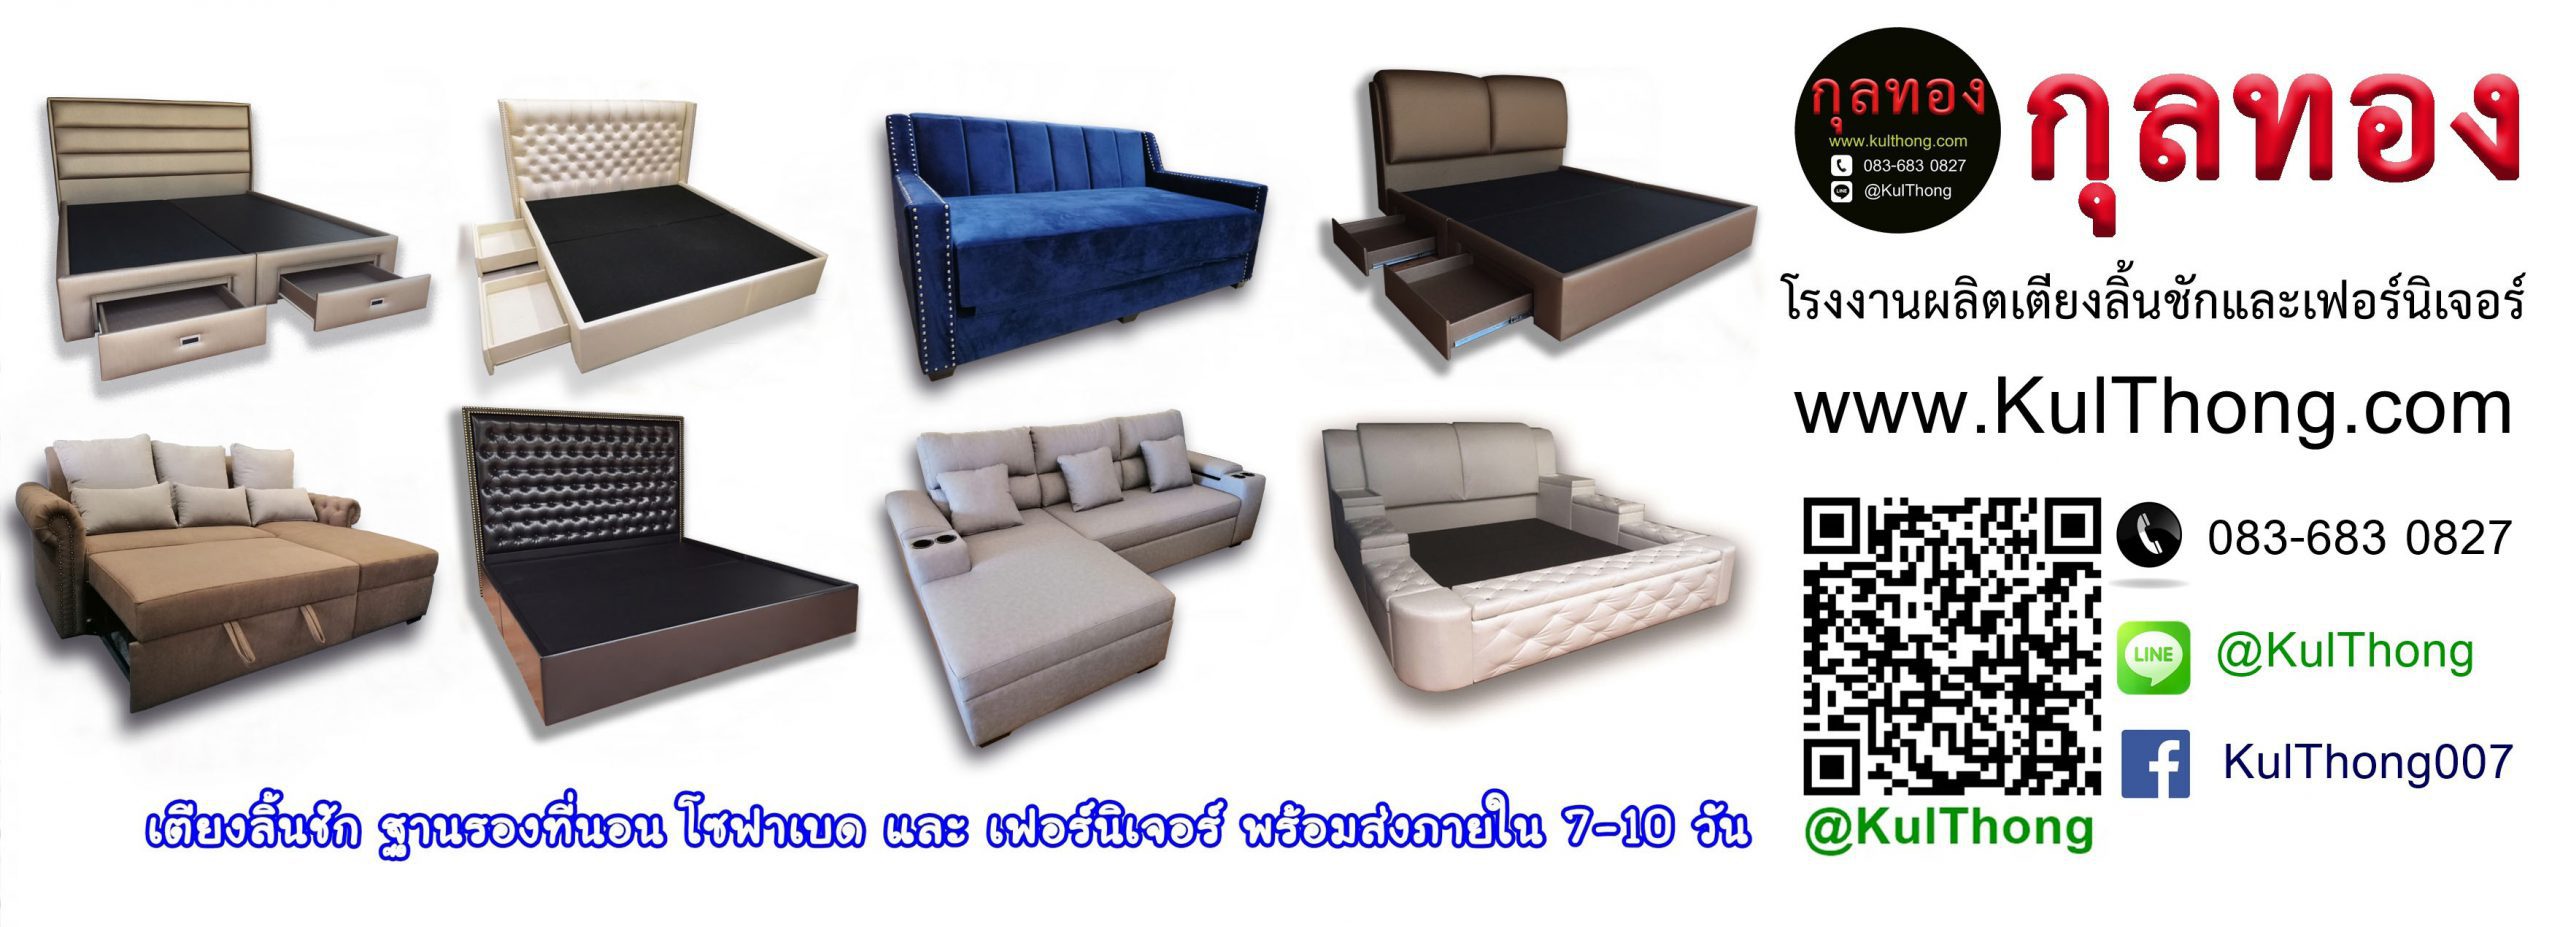 KulThong Bedding And Furniture